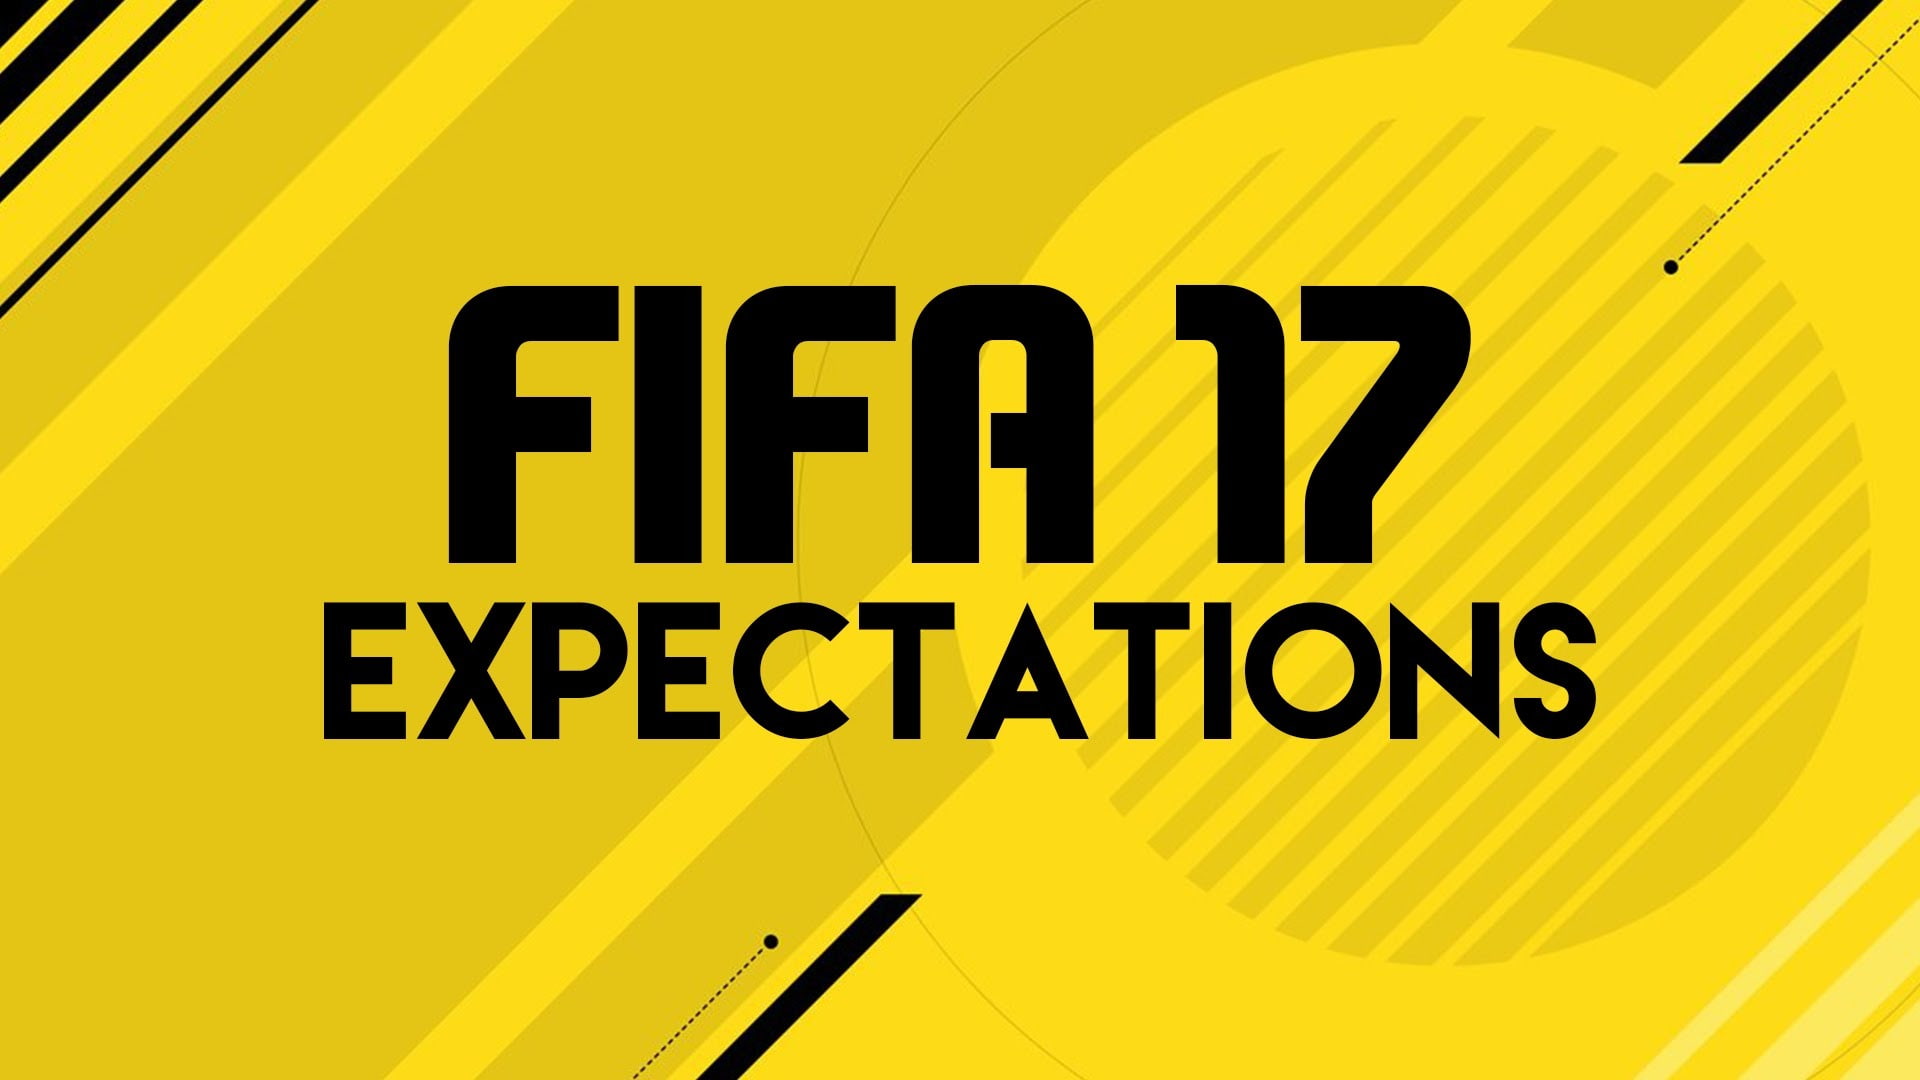 FIFA 17 EA Sports Game HD Wallpaper 15, yellow, text, communication